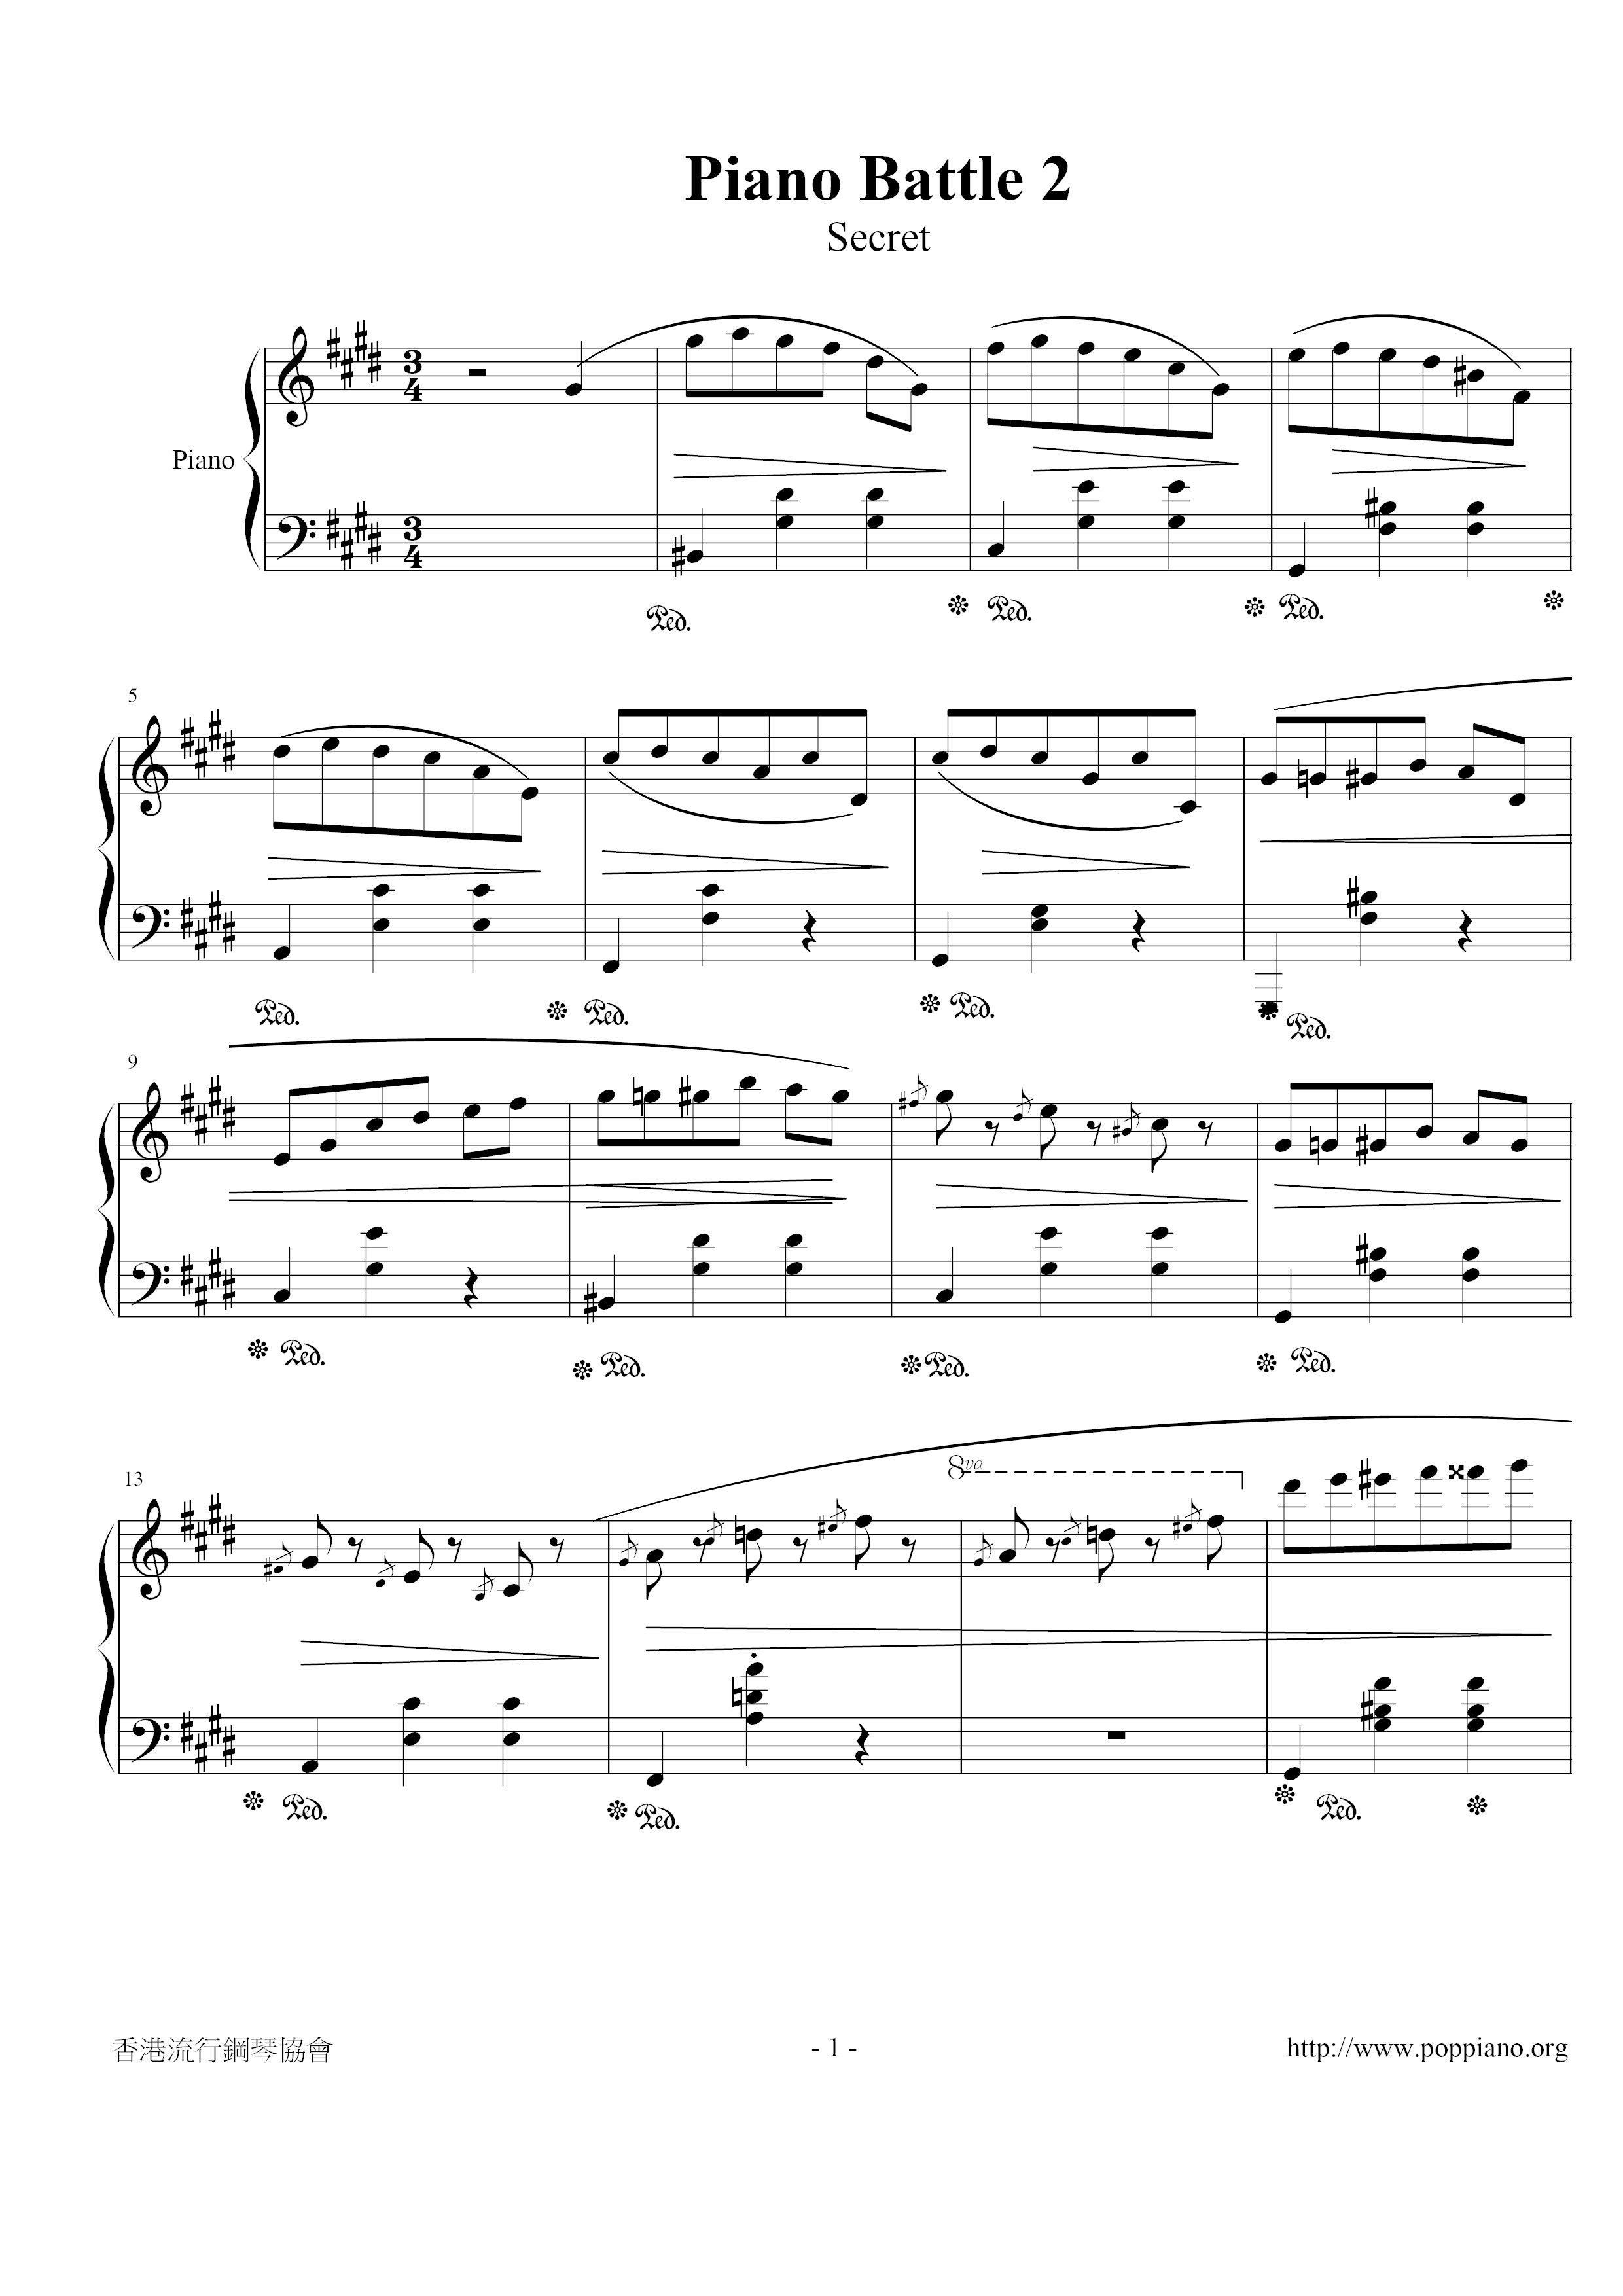 Secret - Piano Battle 2 Score